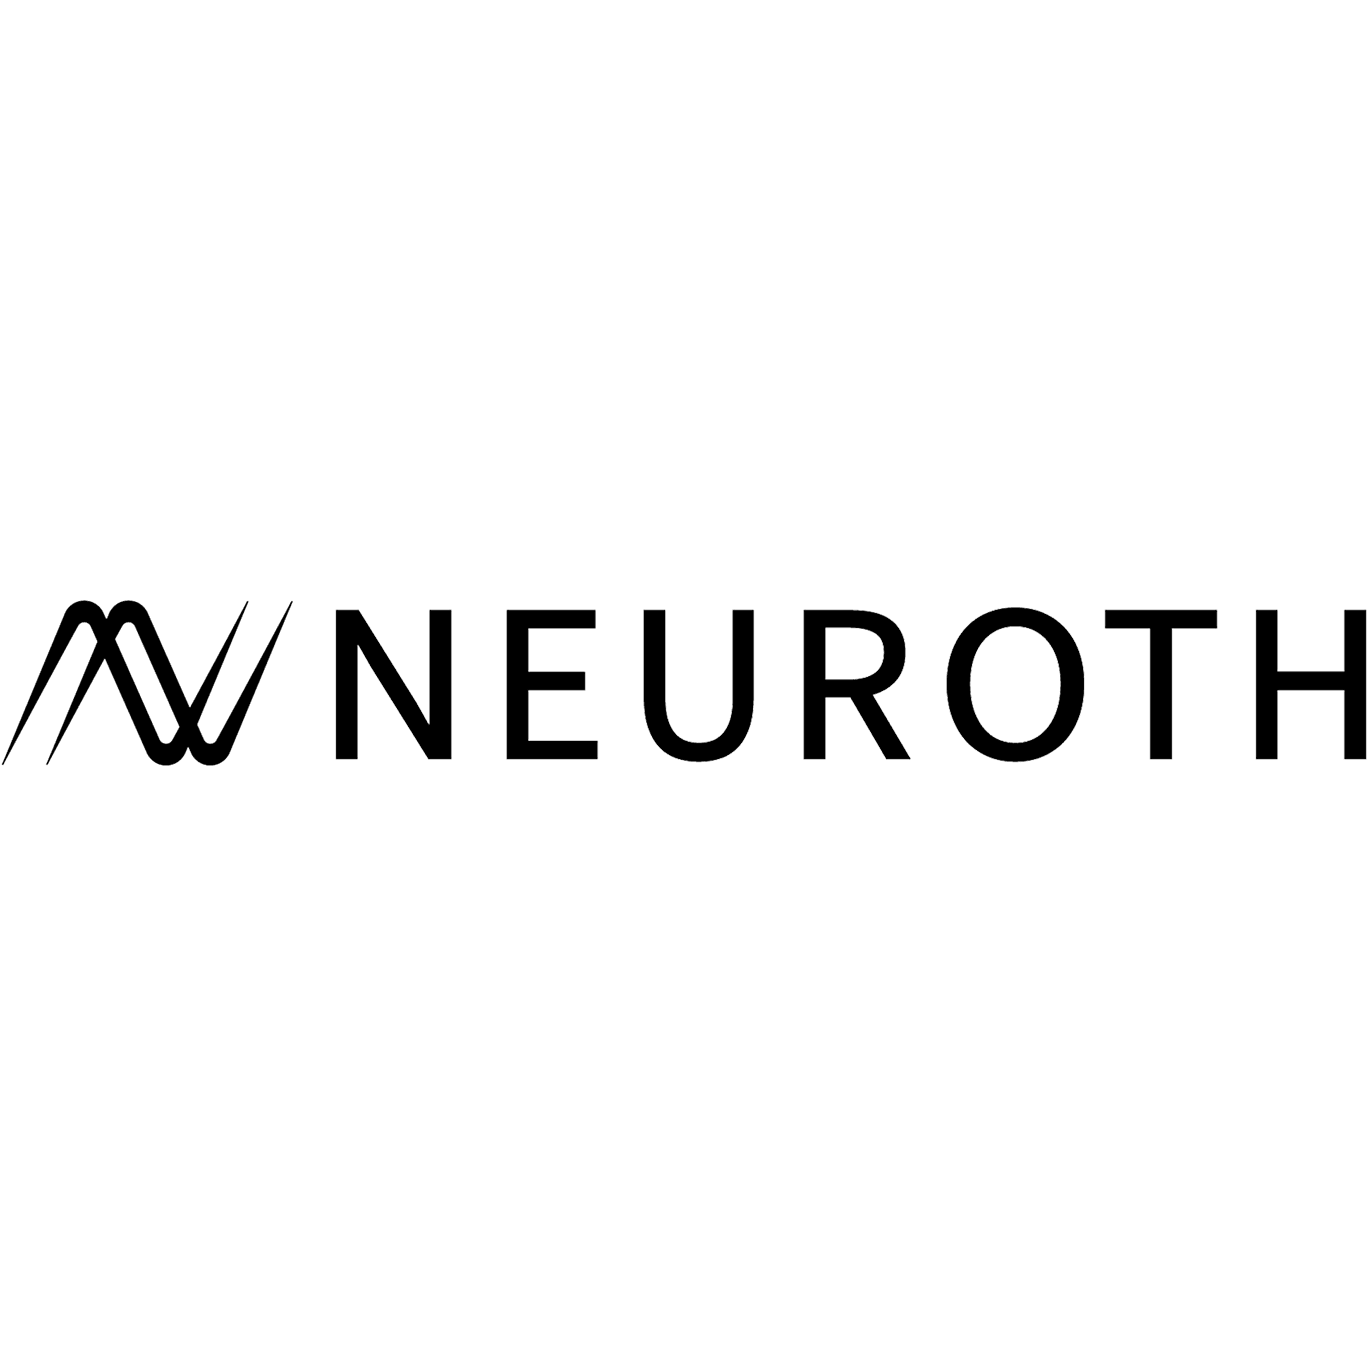 neuroth-logo-square-bw